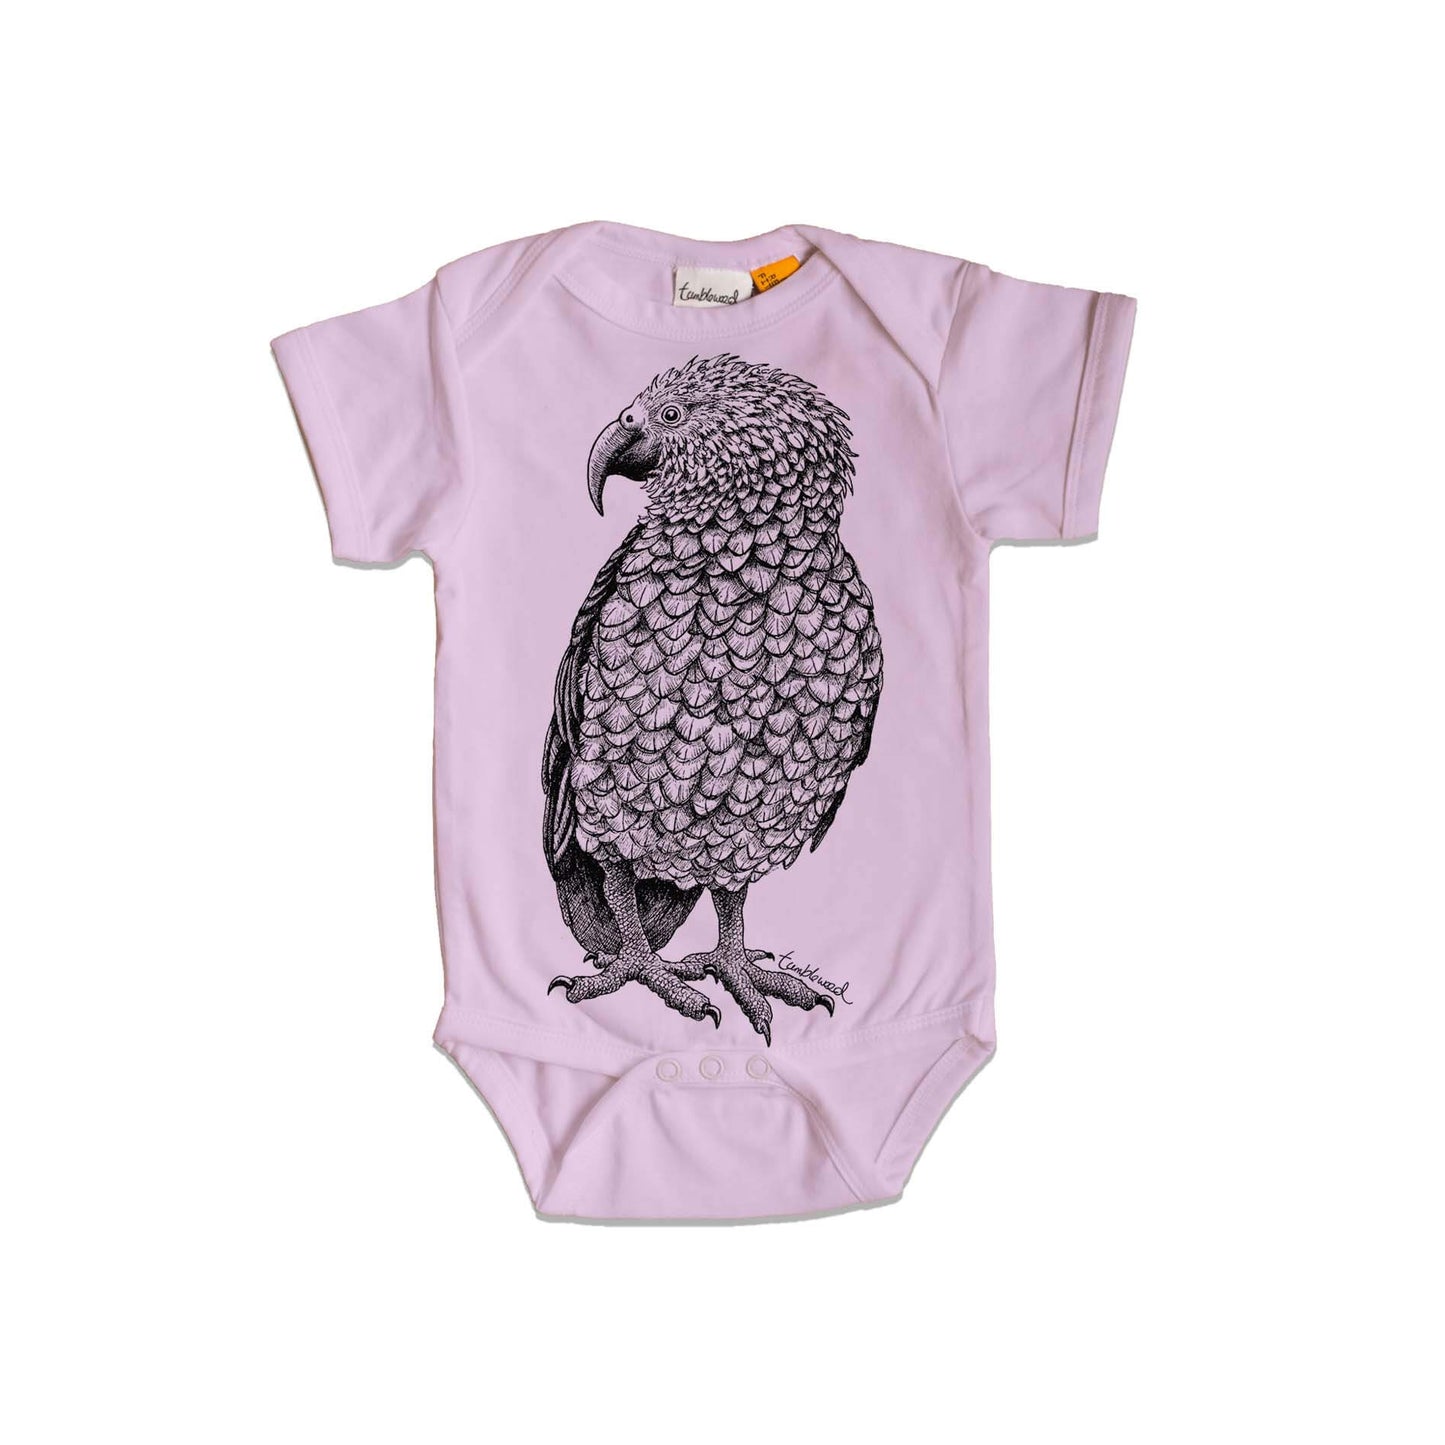 Short sleeved, purple, organic cotton, baby onesie featuring a screen printed Kea design.